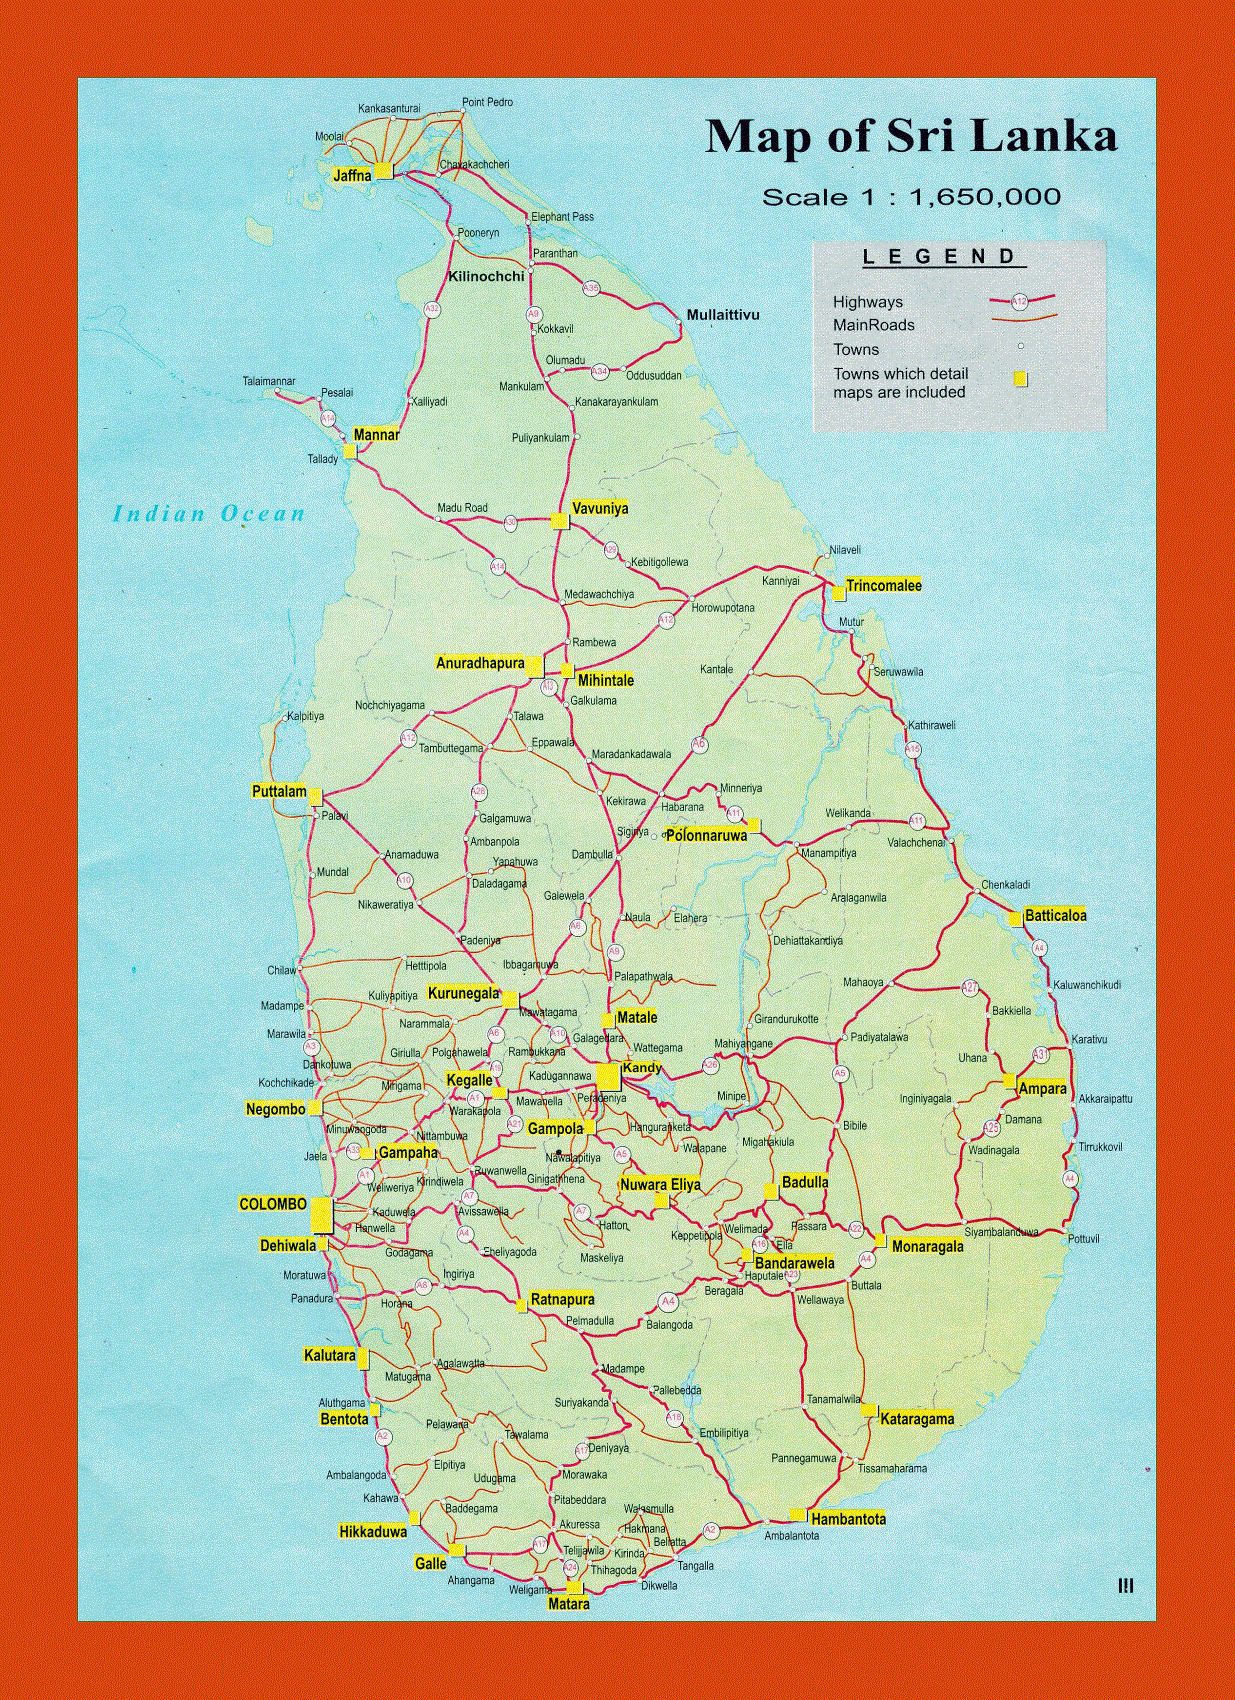 Road map of Sri Lanka